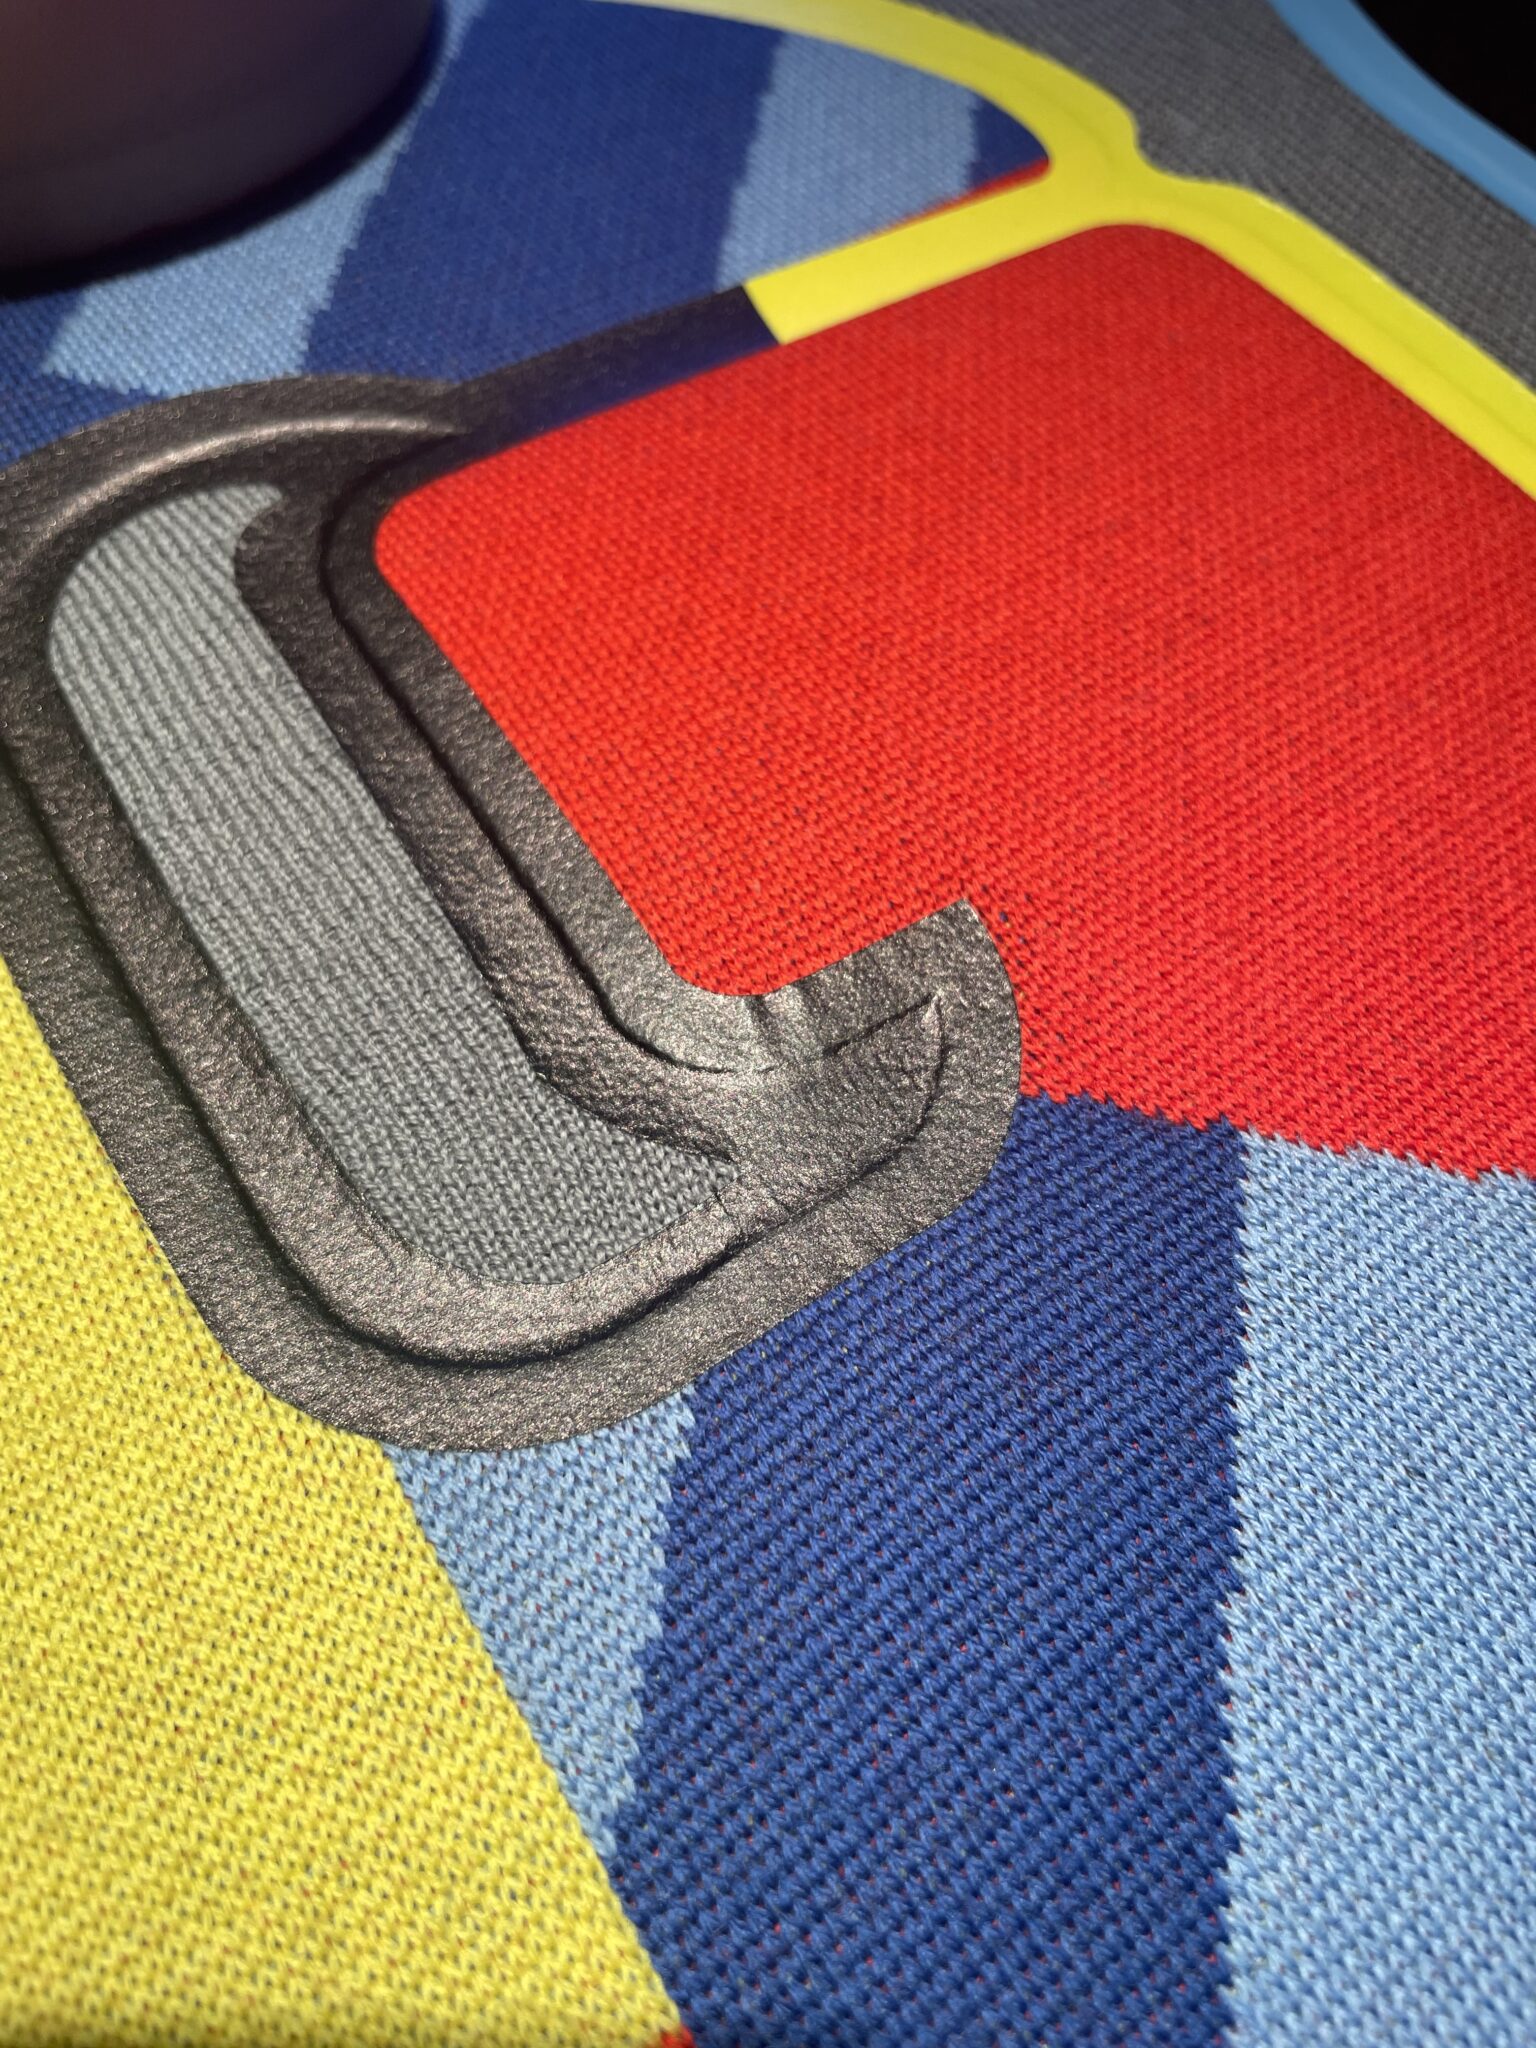 Biella Yarn Company – жаккард и жаккардовый пике с применением термоленты от Zero 1 srl. © Бет Рэнсон